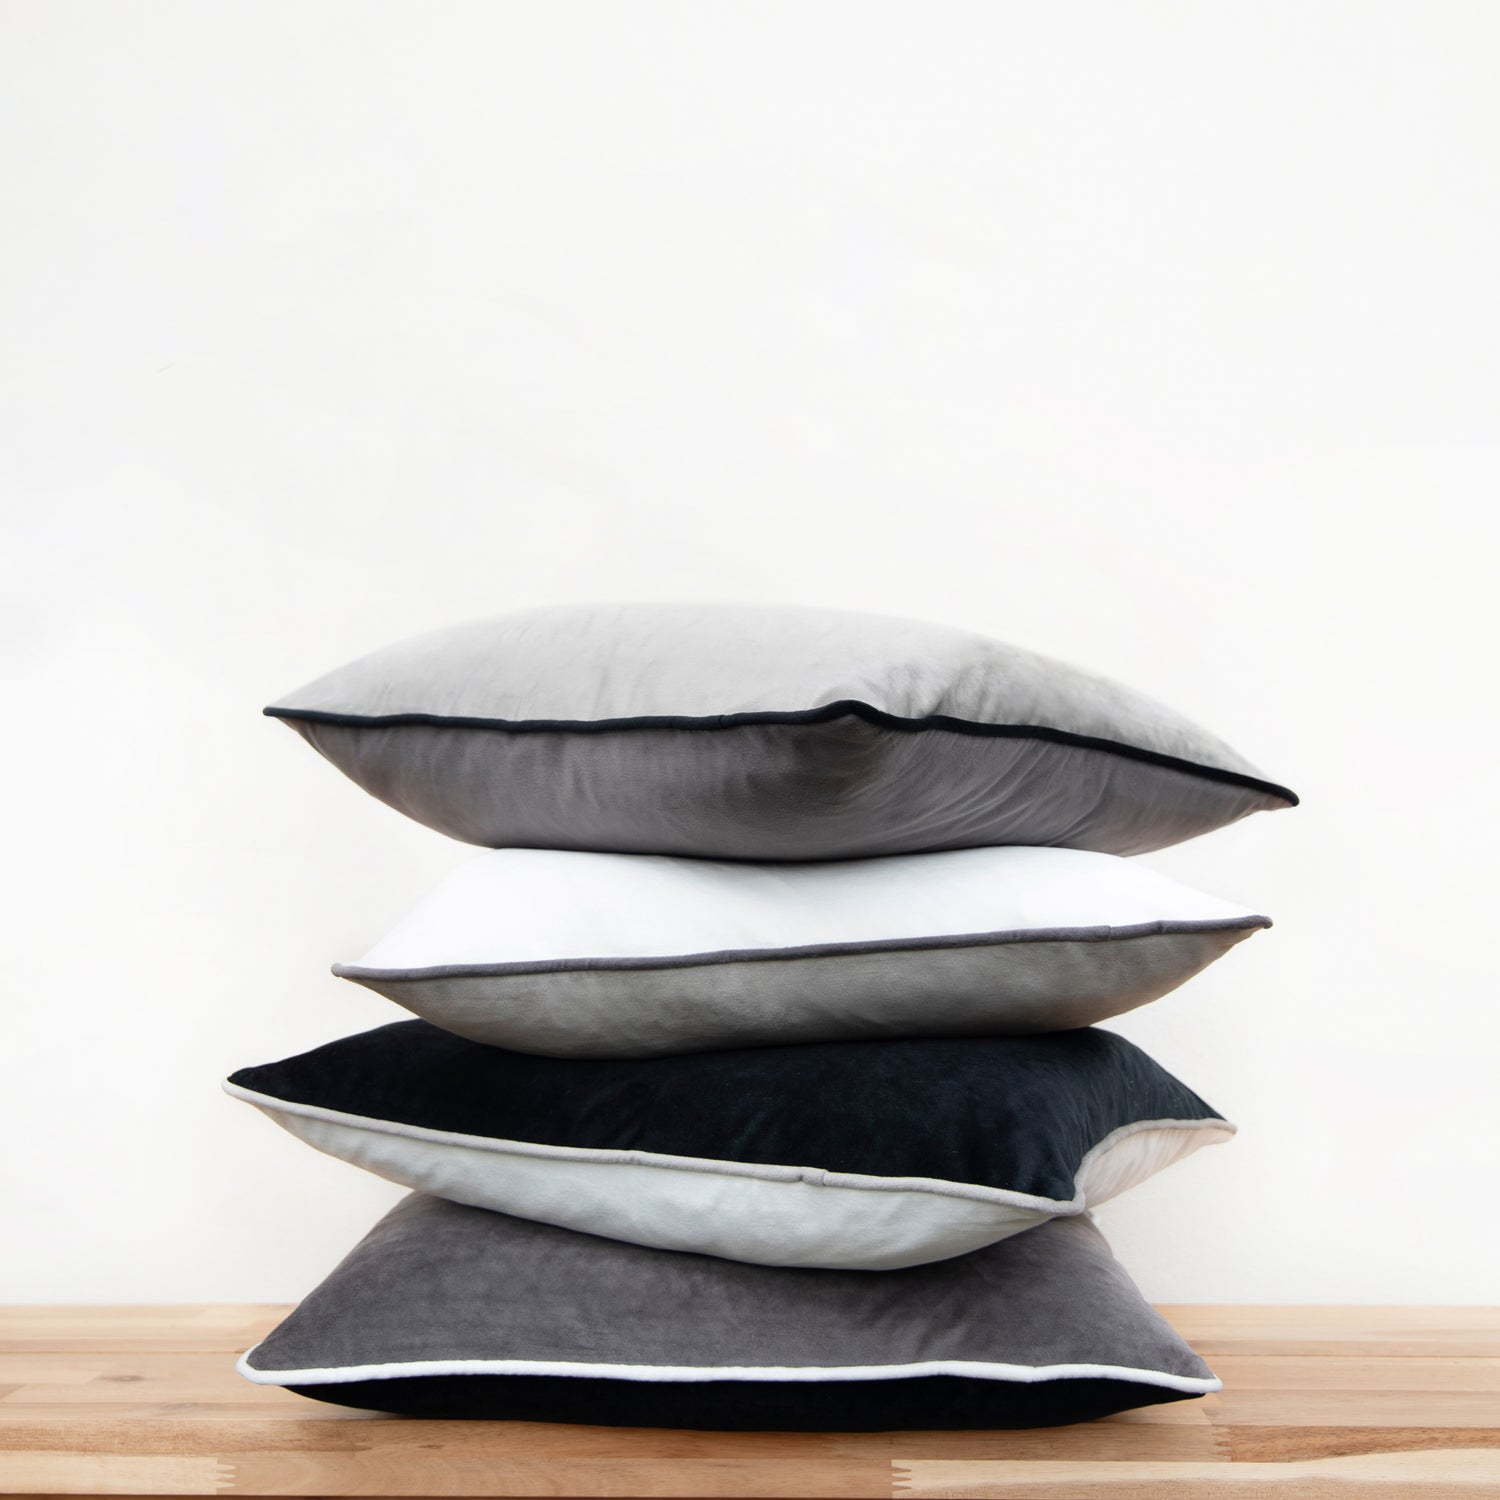 piping throw pillow covers black white grey dark light square velvet soft sham cushion home decor